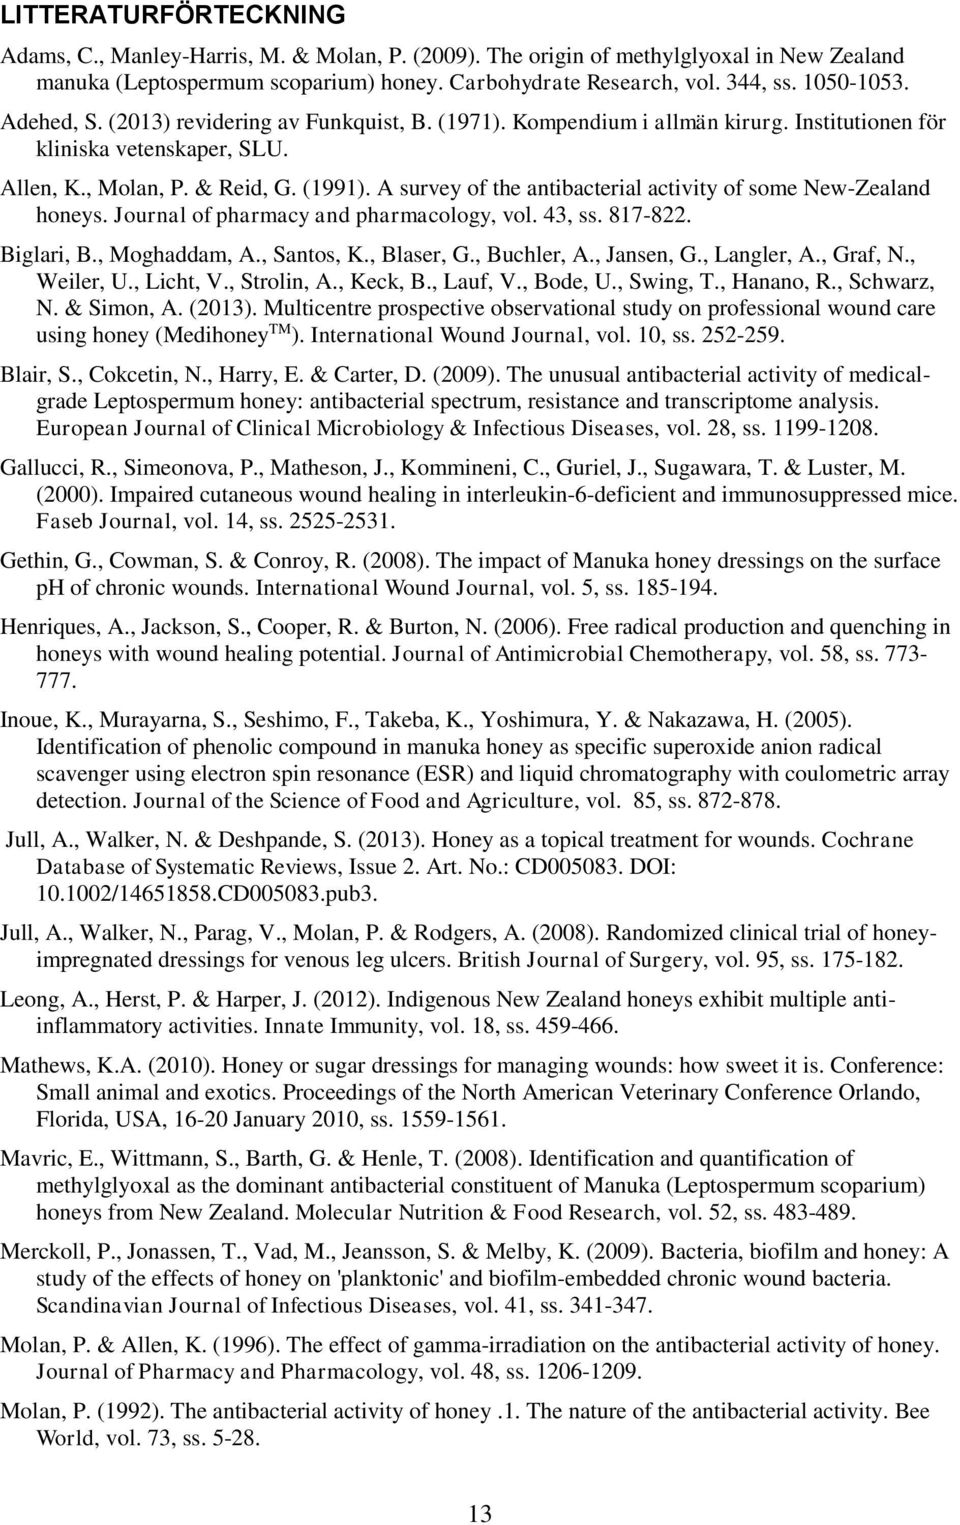 A survey of the antibacterial activity of some New-Zealand honeys. Journal of pharmacy and pharmacology, vol. 43, ss. 817-822. Biglari, B., Moghaddam, A., Santos, K., Blaser, G., Buchler, A.